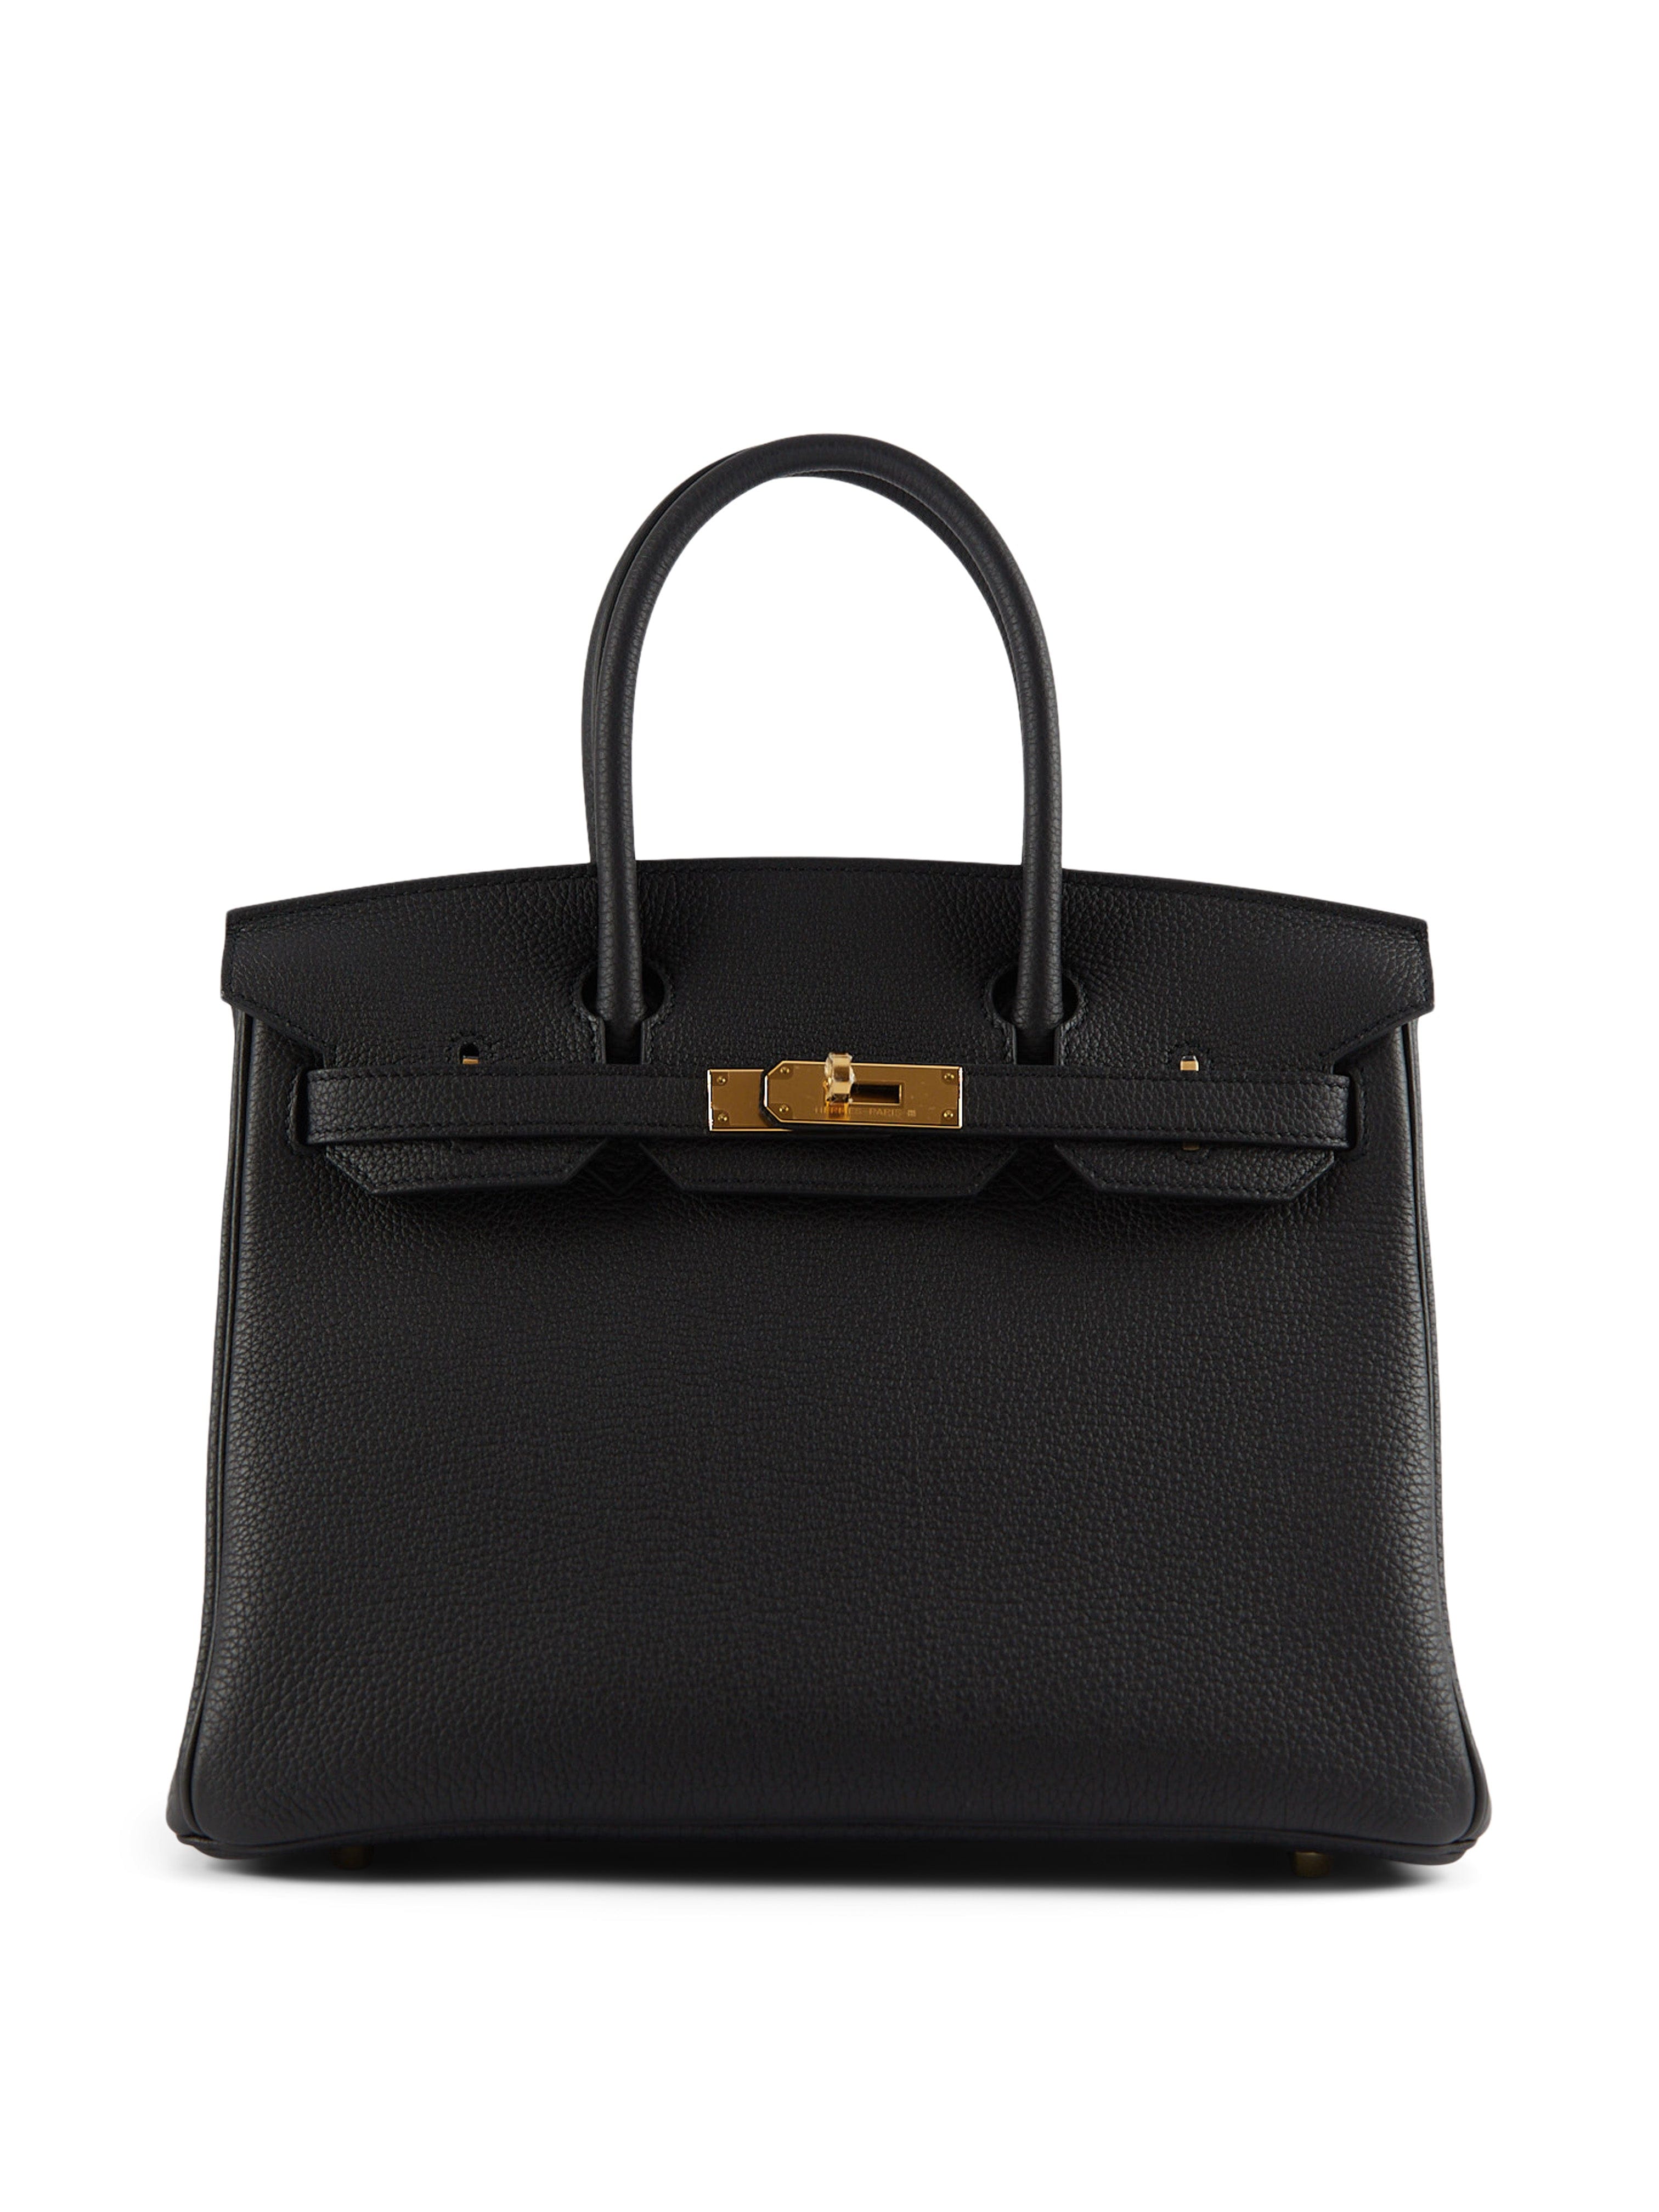 www.LuxuryVault.London HERMÈS BIRKIN 30CM BLACK Togo Leather with Gold Hardware